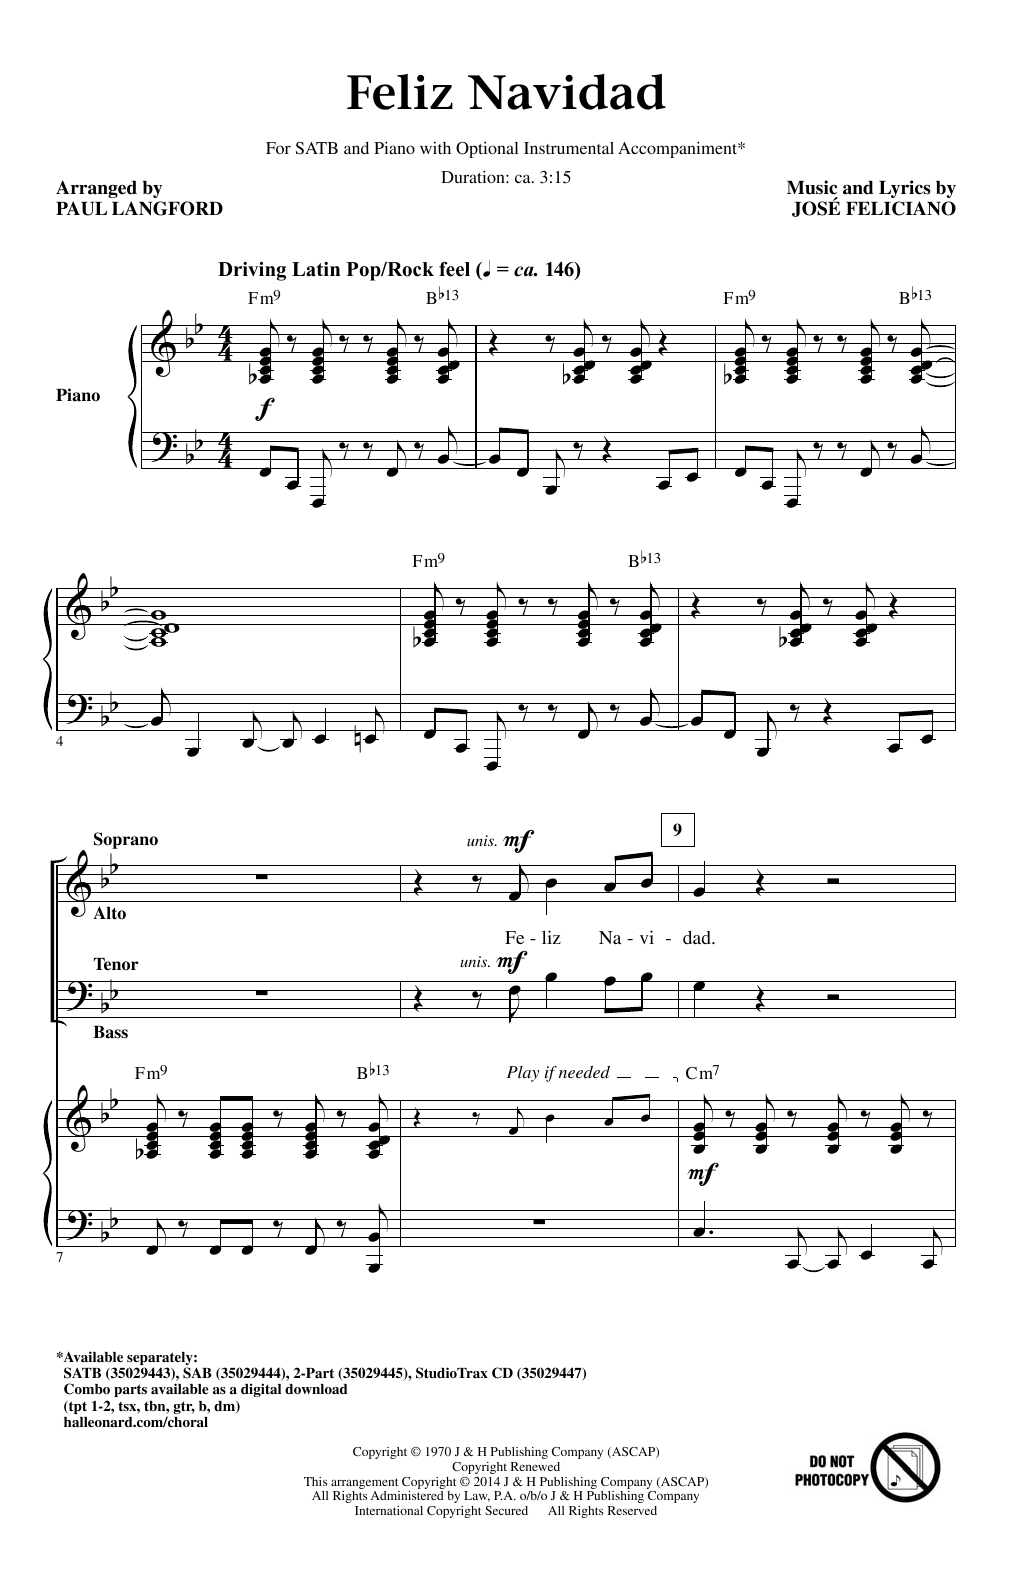 Jose Feliciano Feliz Navidad (arr. Paul Langford) Sheet Music Notes & Chords for 2-Part Choir - Download or Print PDF